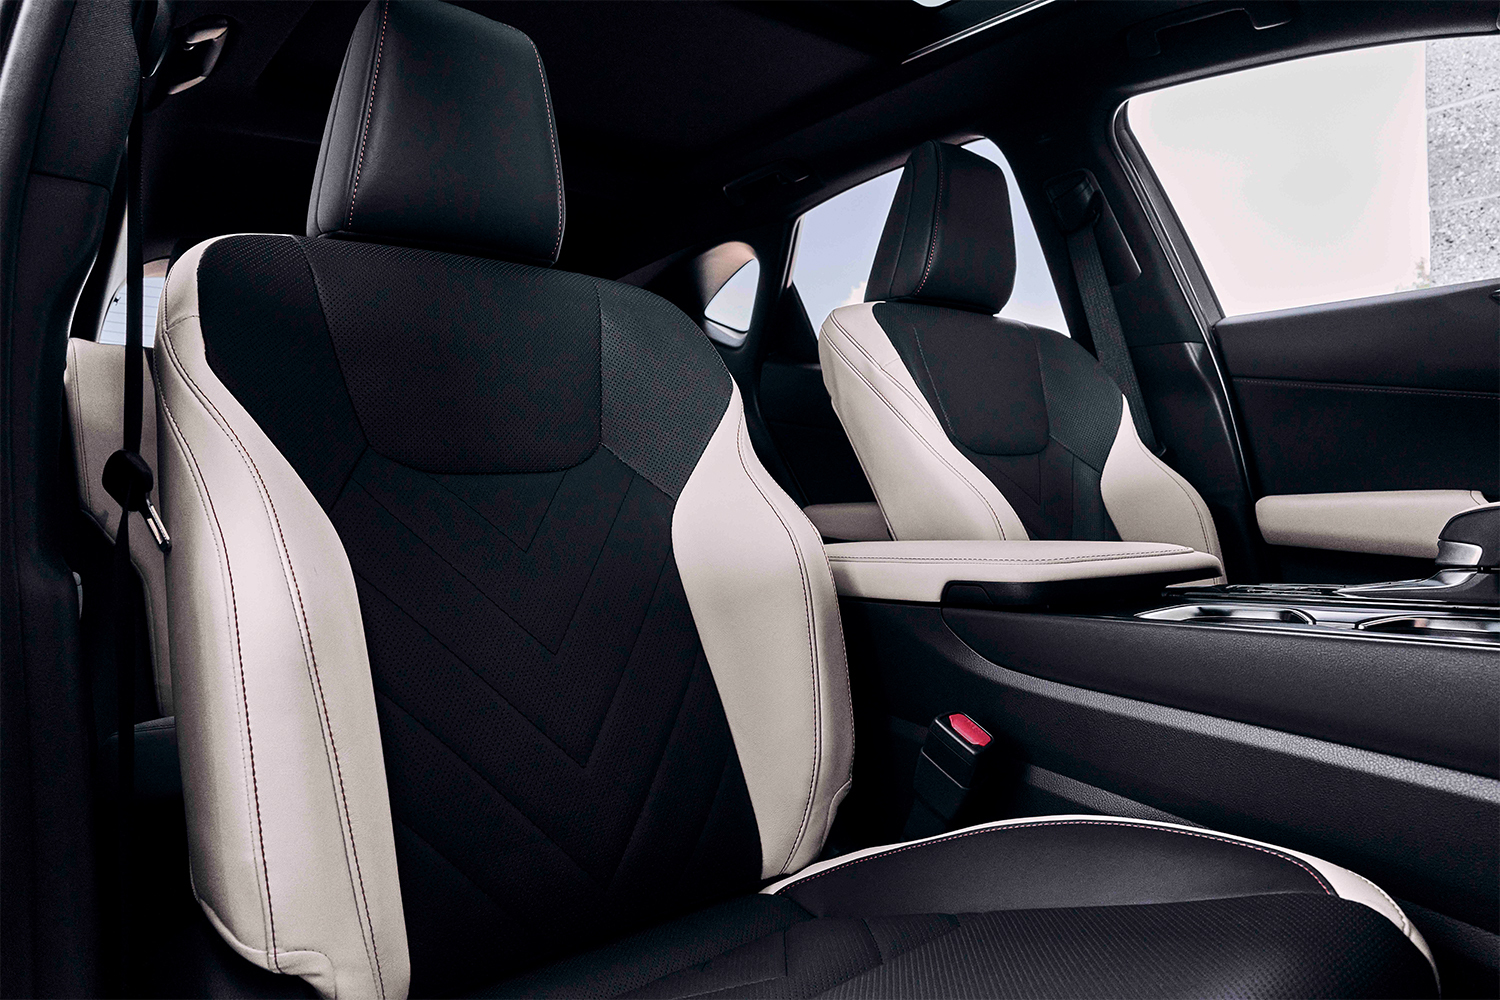 Seats in the 2022 Lexus NX 350h Hybrid SUV